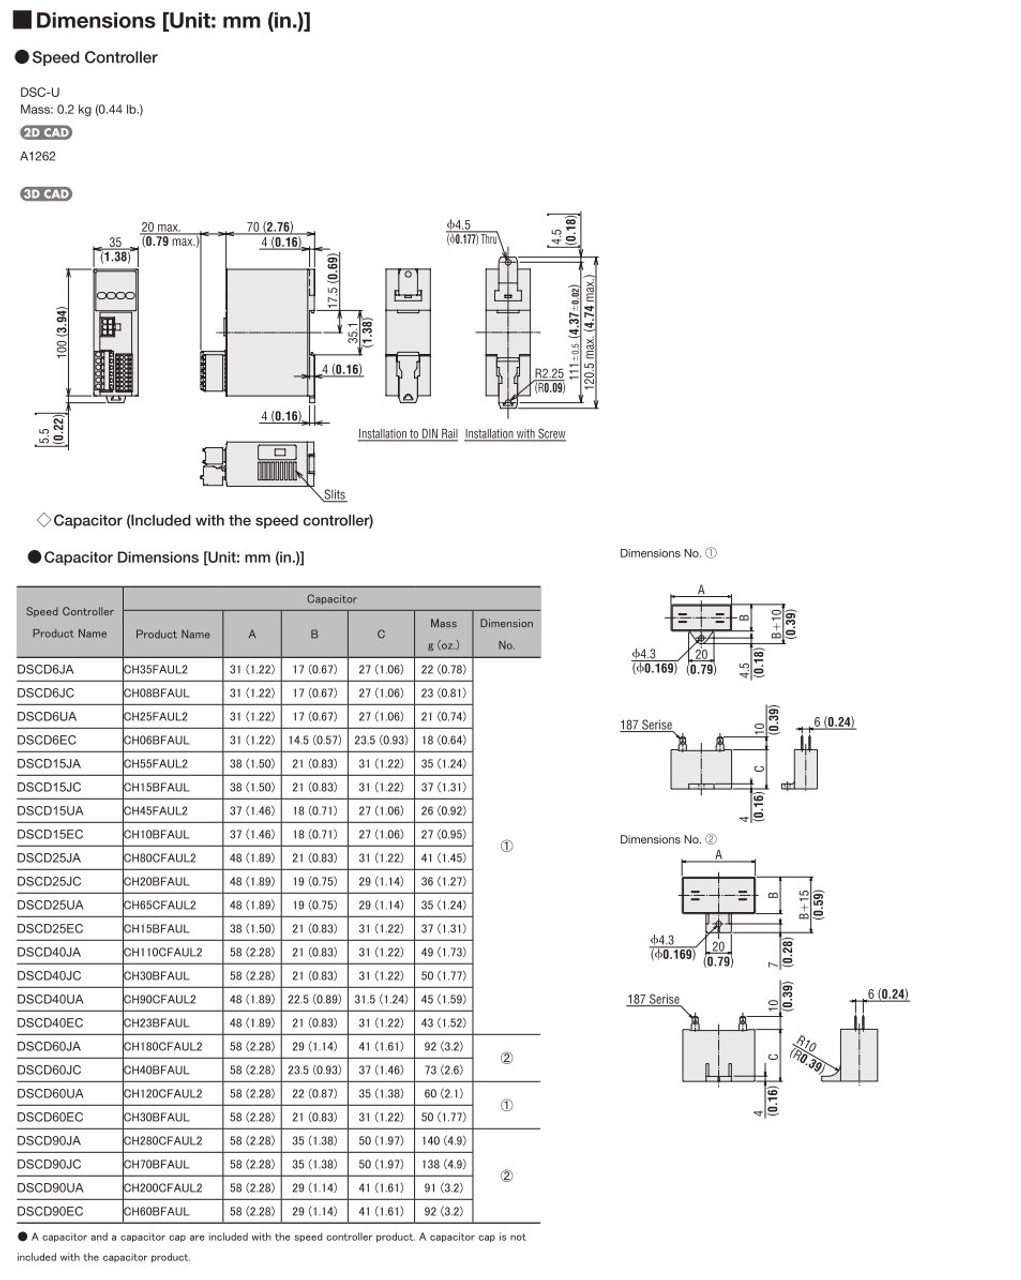 SCM315UA-90A / DSCD15UA - Dimensions